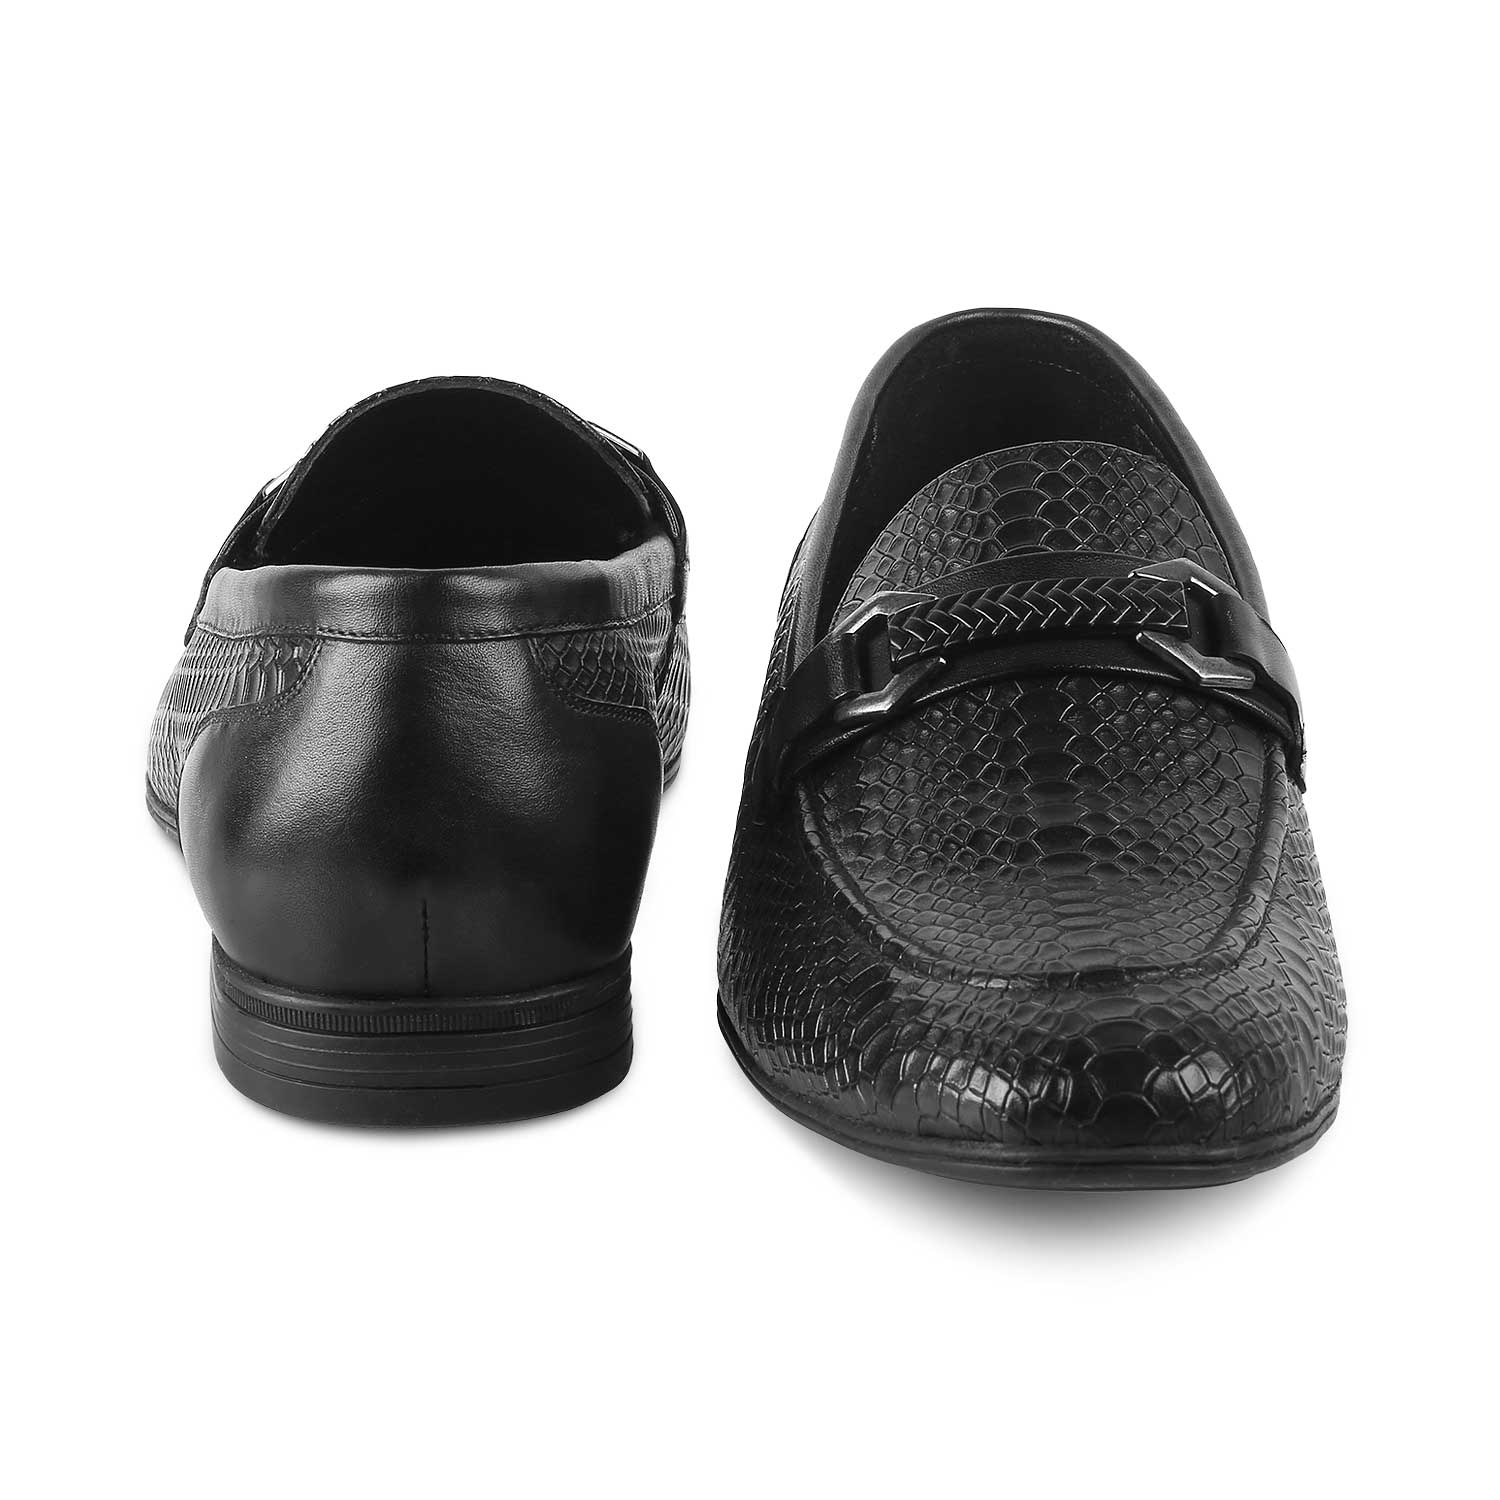 Cytom Black Men's Leather Loafers Online at Tresmode.com